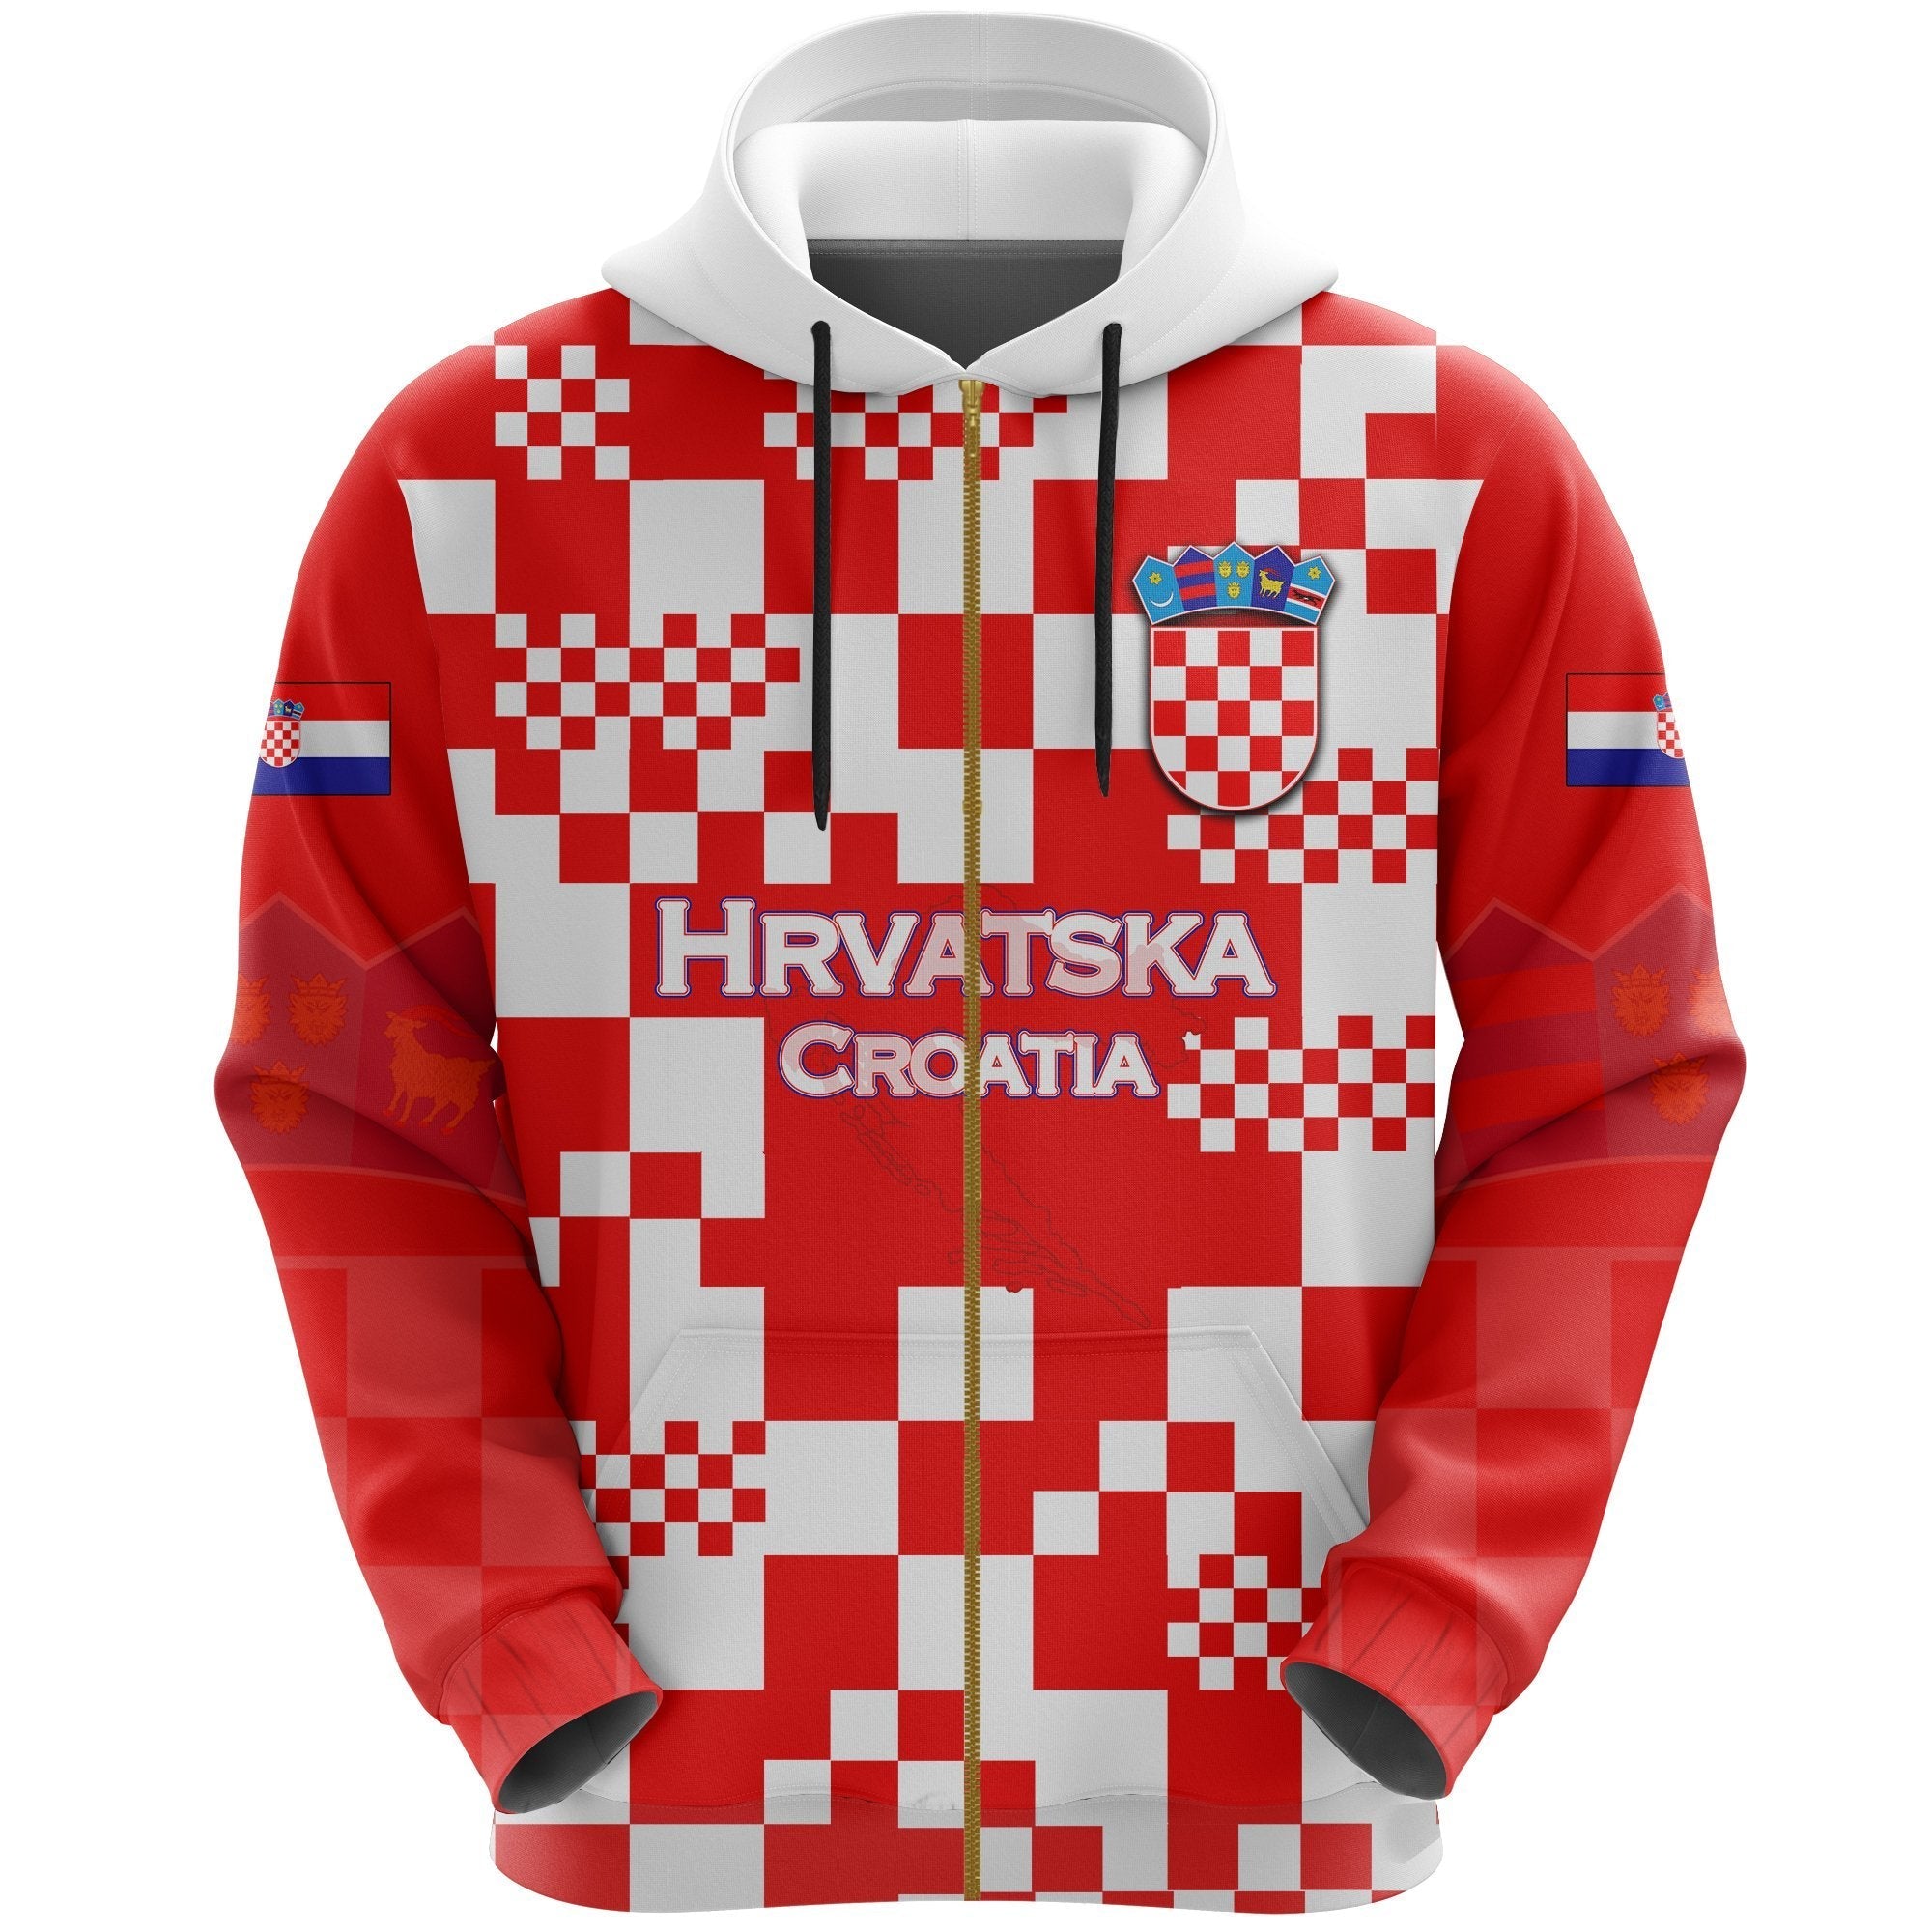 hrvatska-croatia-hoodie-2020-euro-croatia-zip